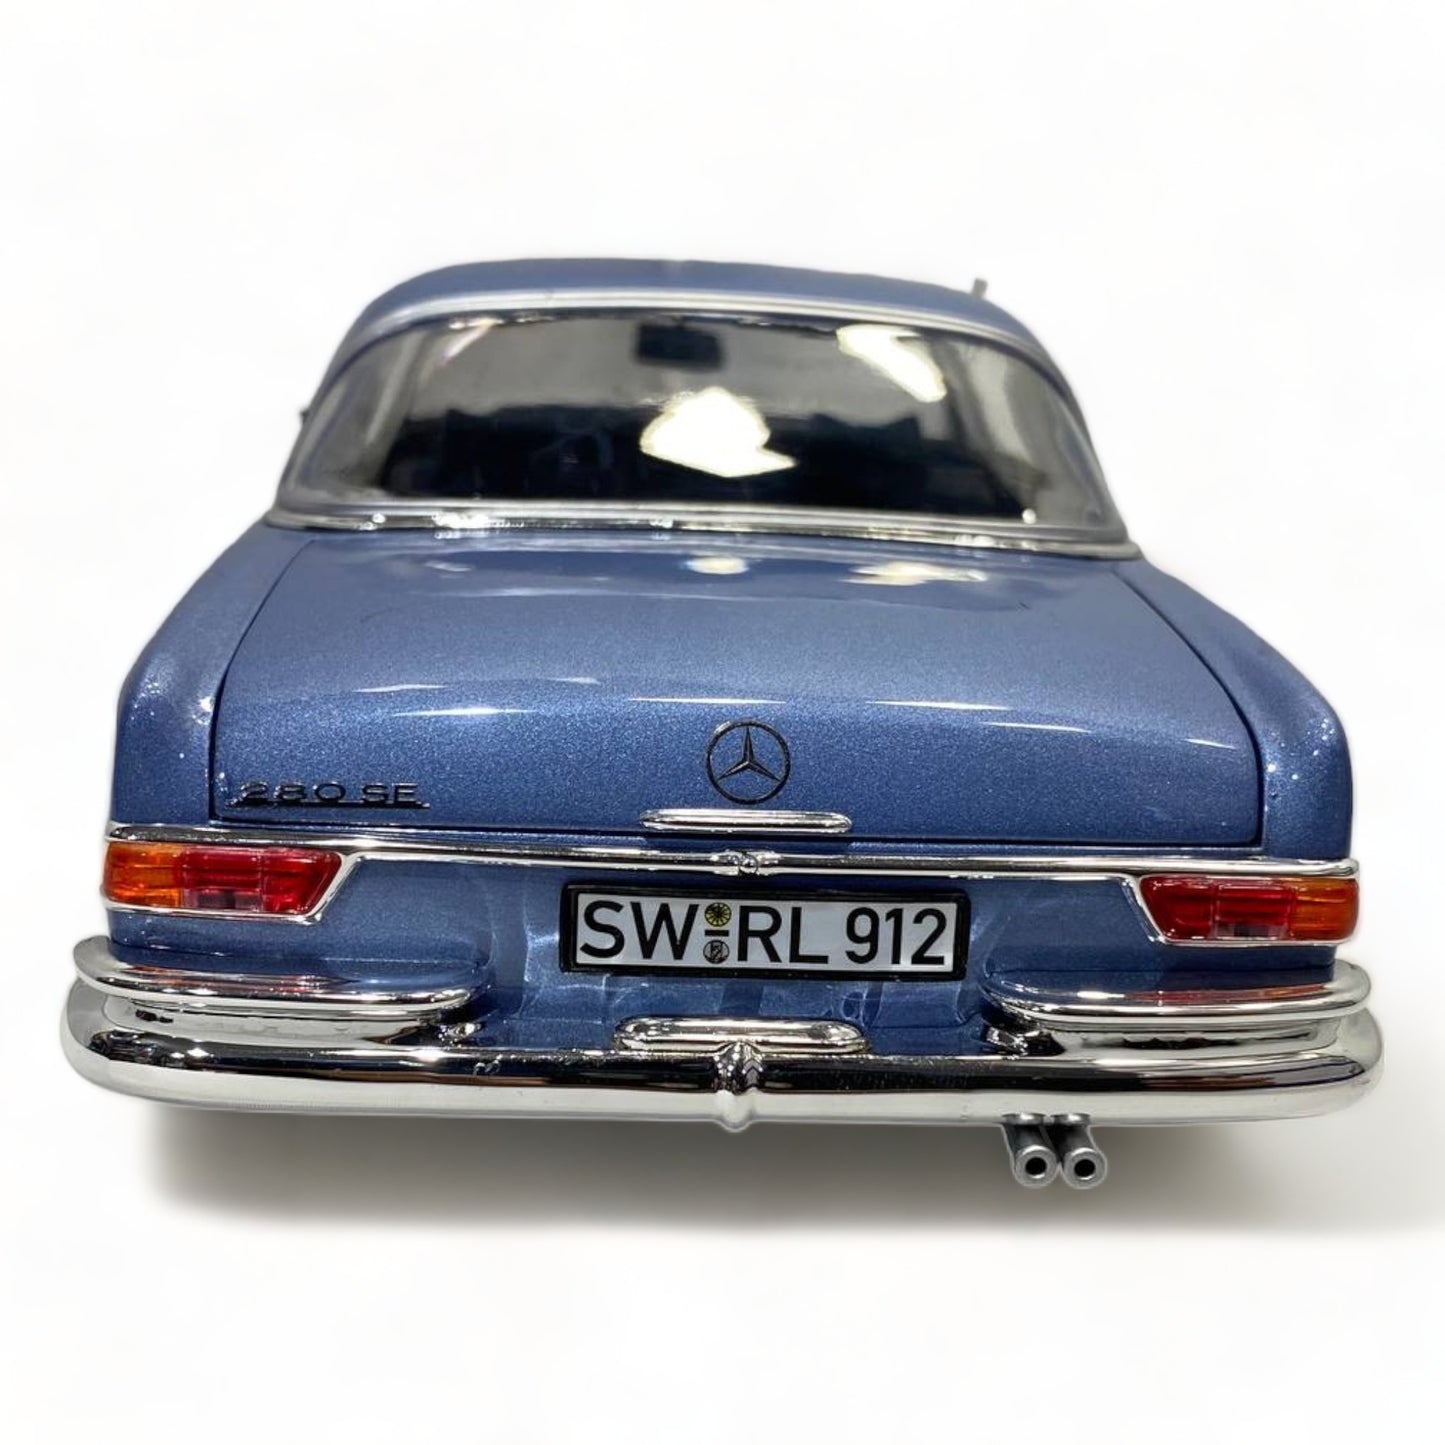 1/18 metal diecast Norev Mercedes Benz 280 SE Coupe 1969 blue Metallic scale Model Car